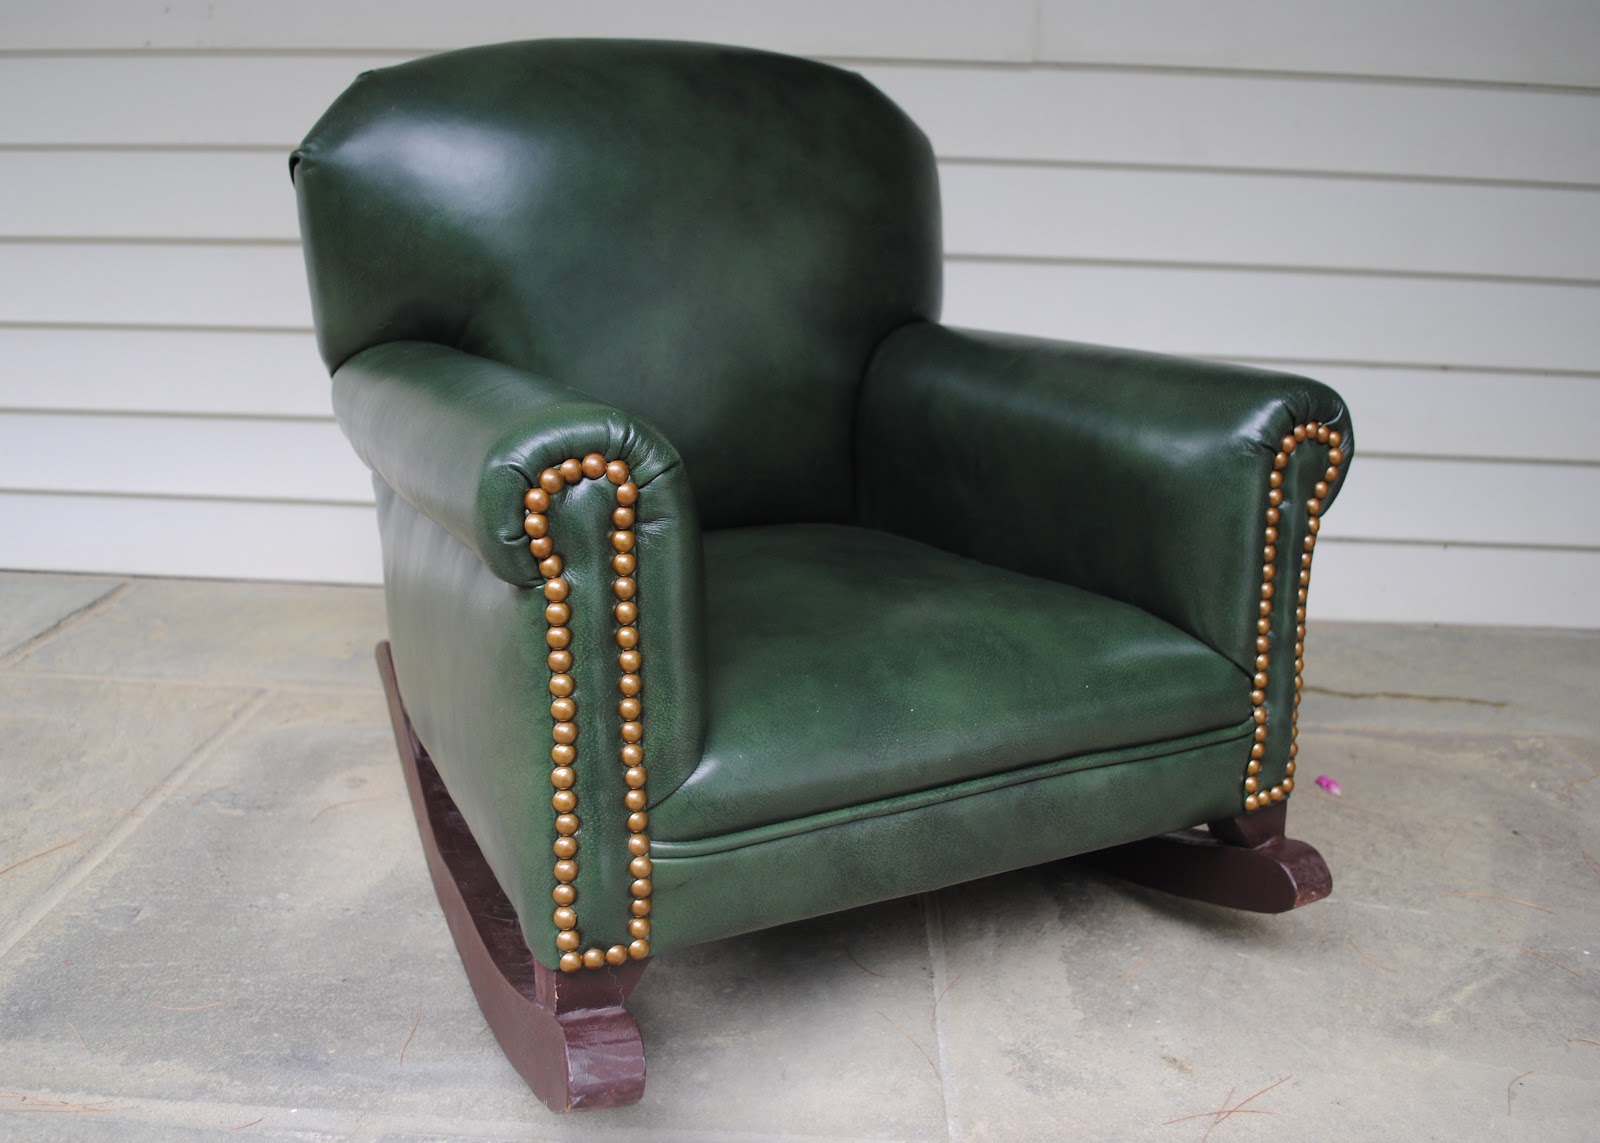 Upholstered Rocking Chair For Living Room